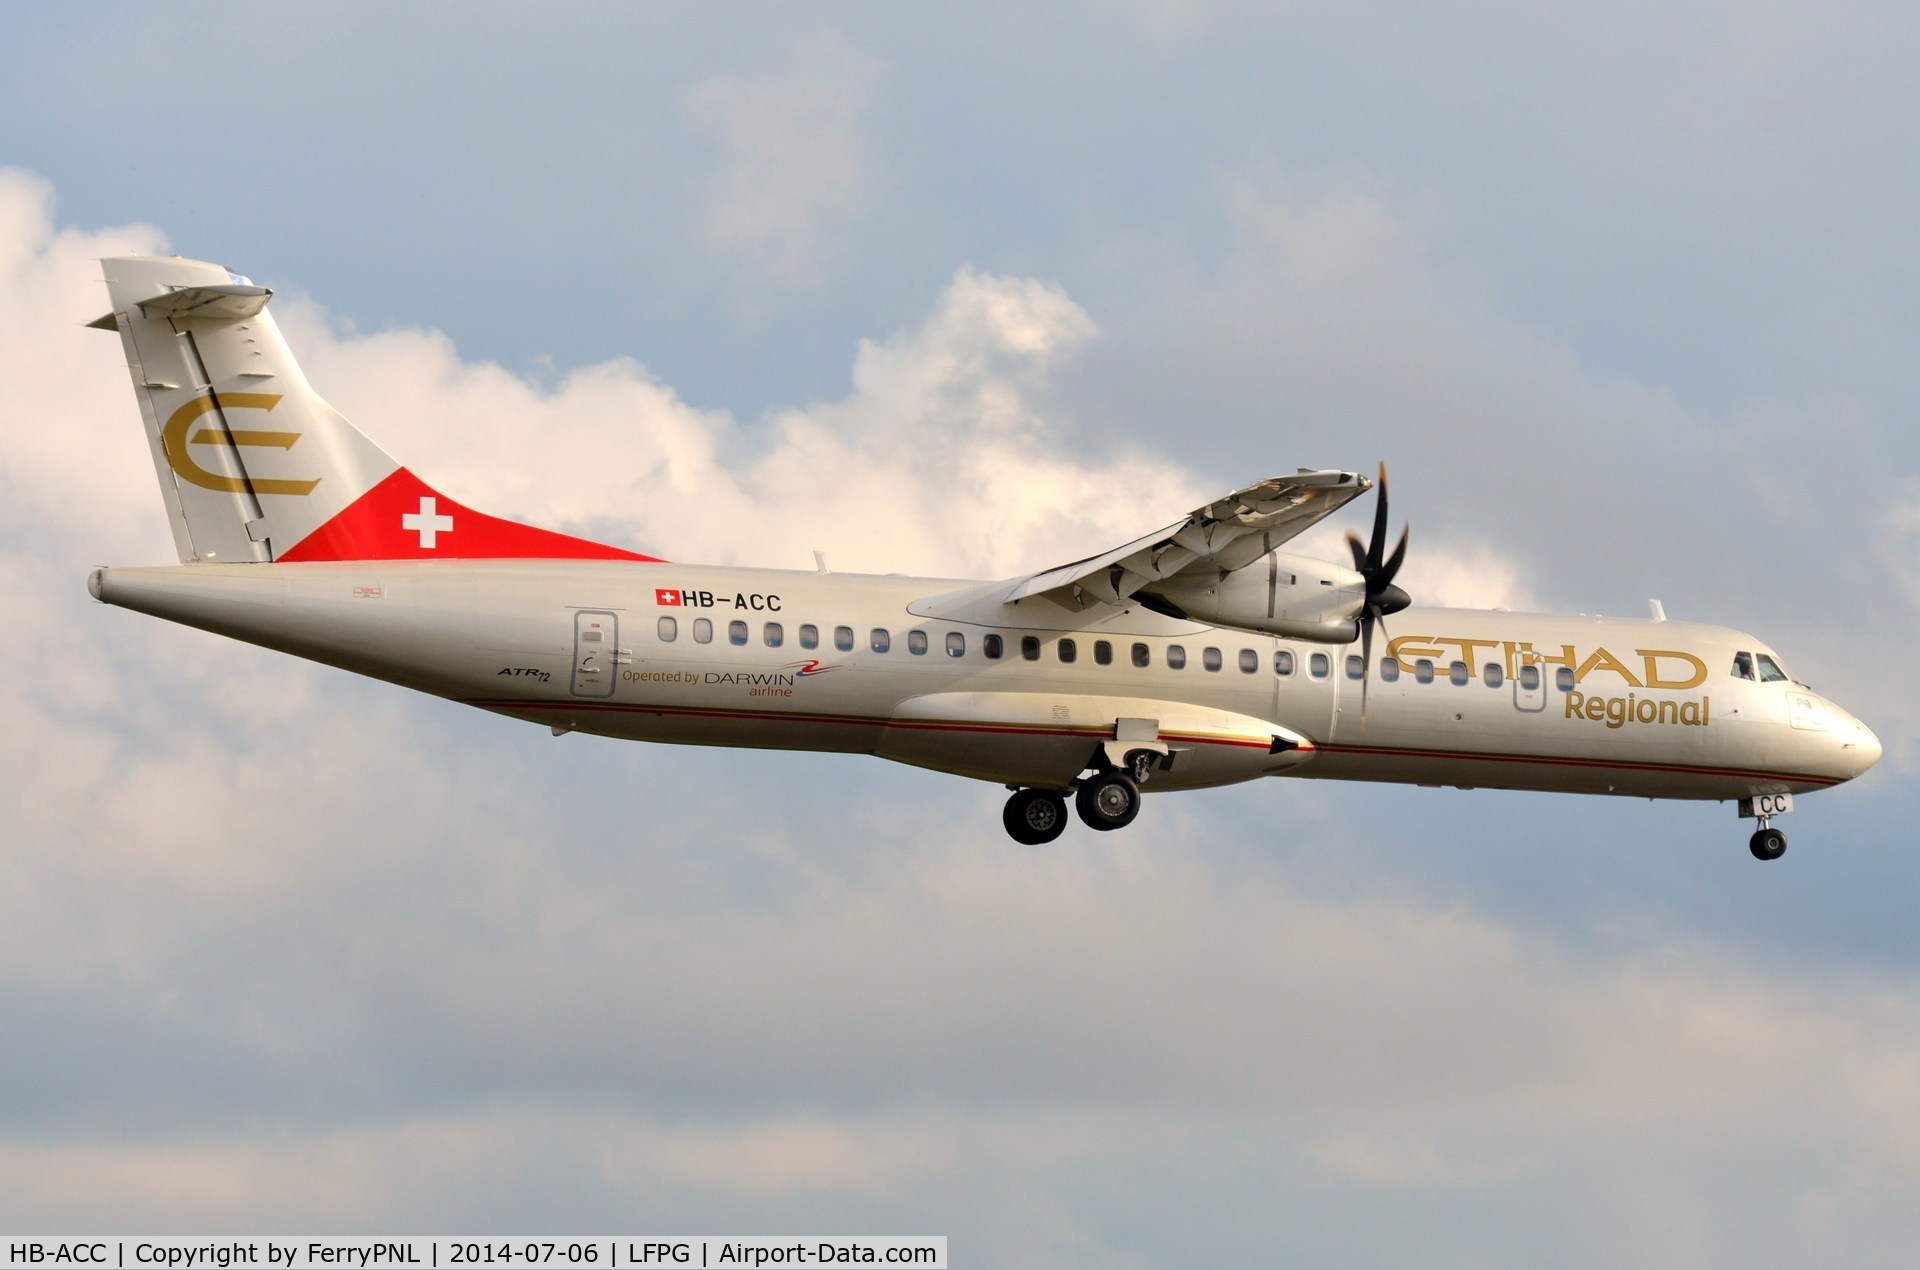 HB-ACC, 2001 ATR 72-212A C/N 664, Darwin Airline operating for Etihad Regional.